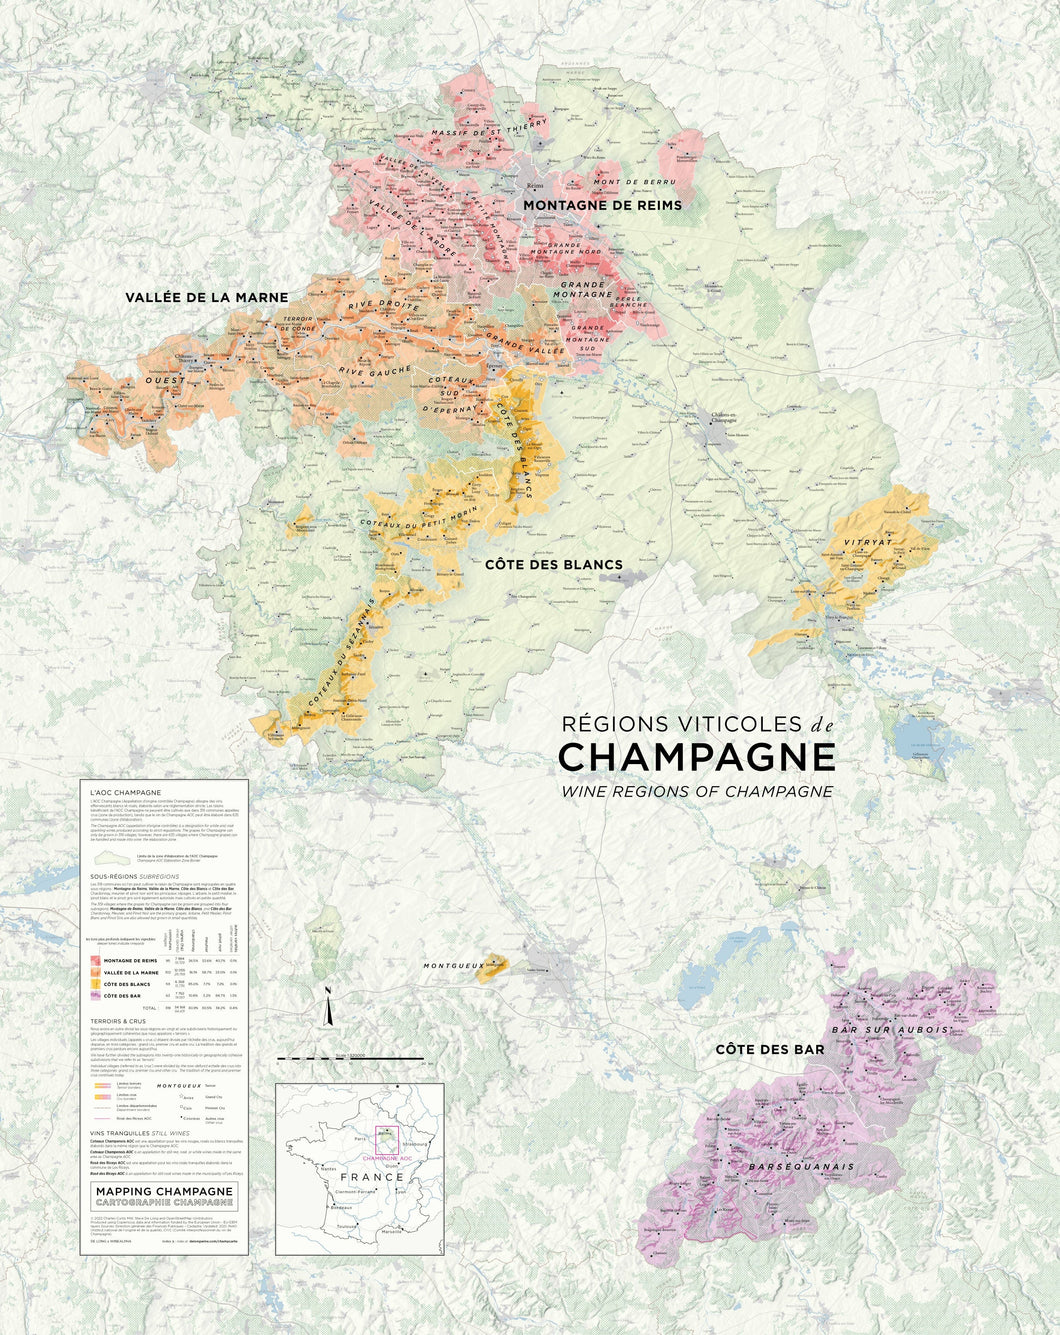 Wine regions of Champagne